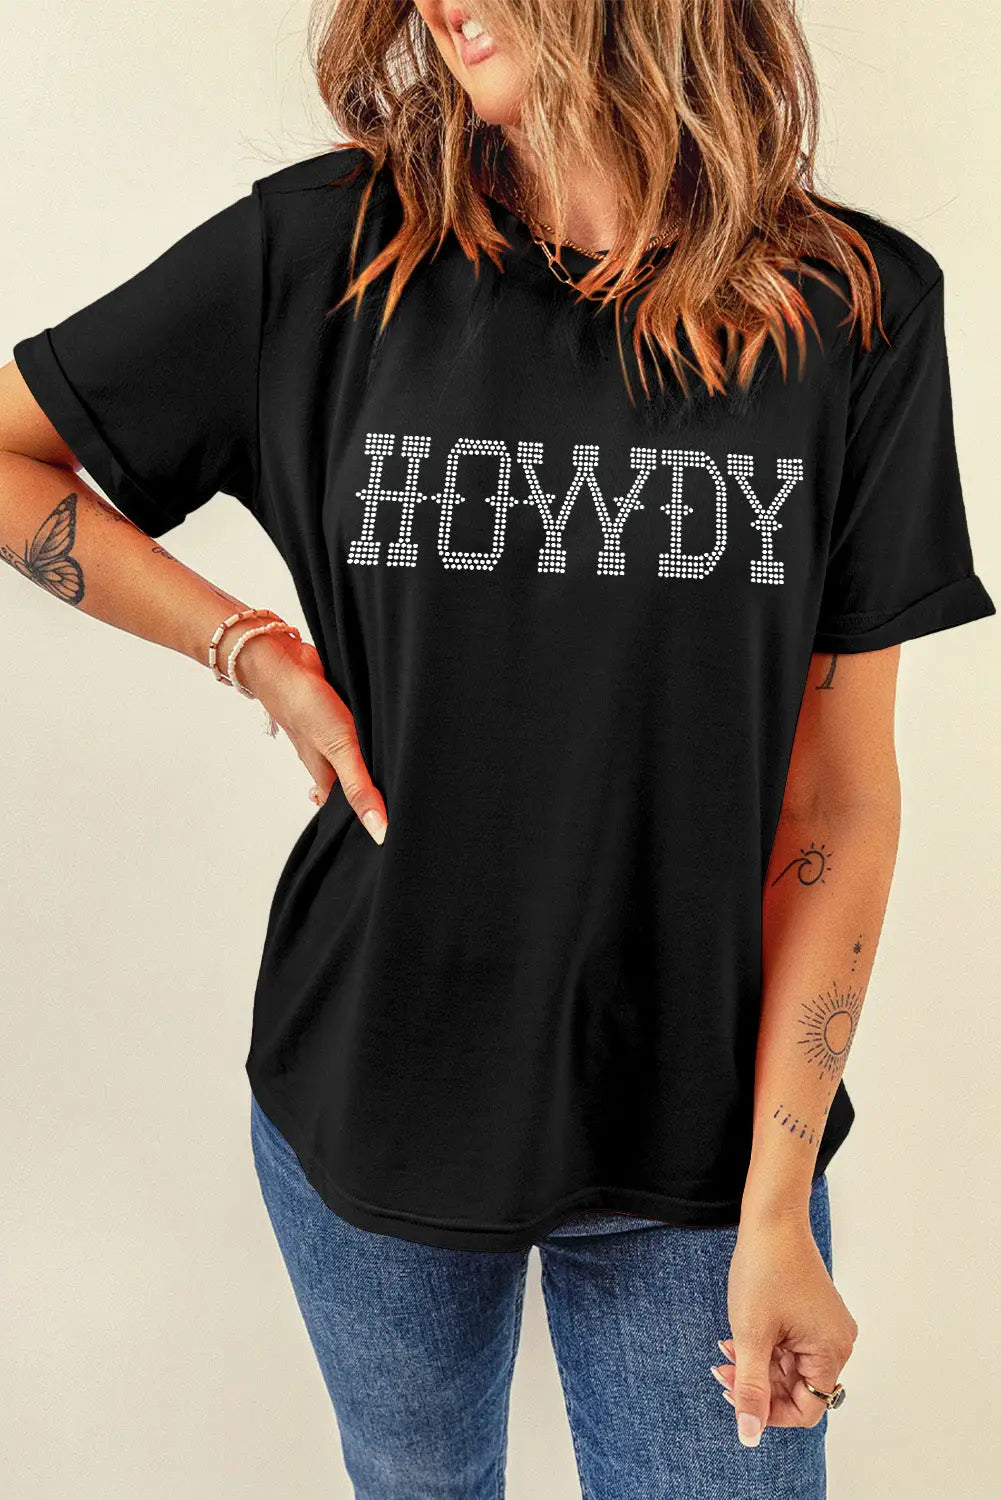 Black howdy rhinestone slim fit crew neck t shirt - graphic t-shirts